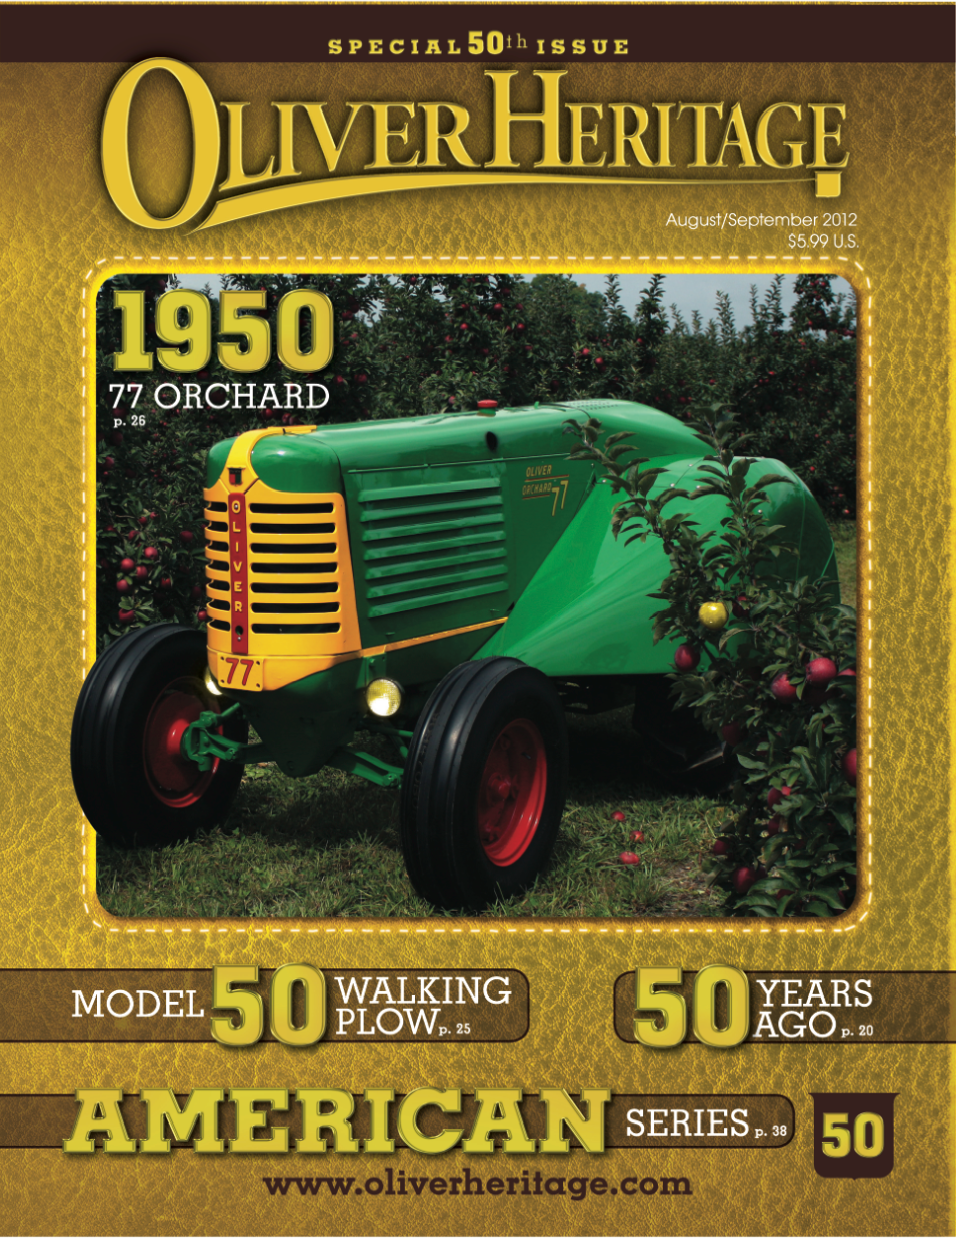 Oliver Heritage Issue #50 - Digital Copy